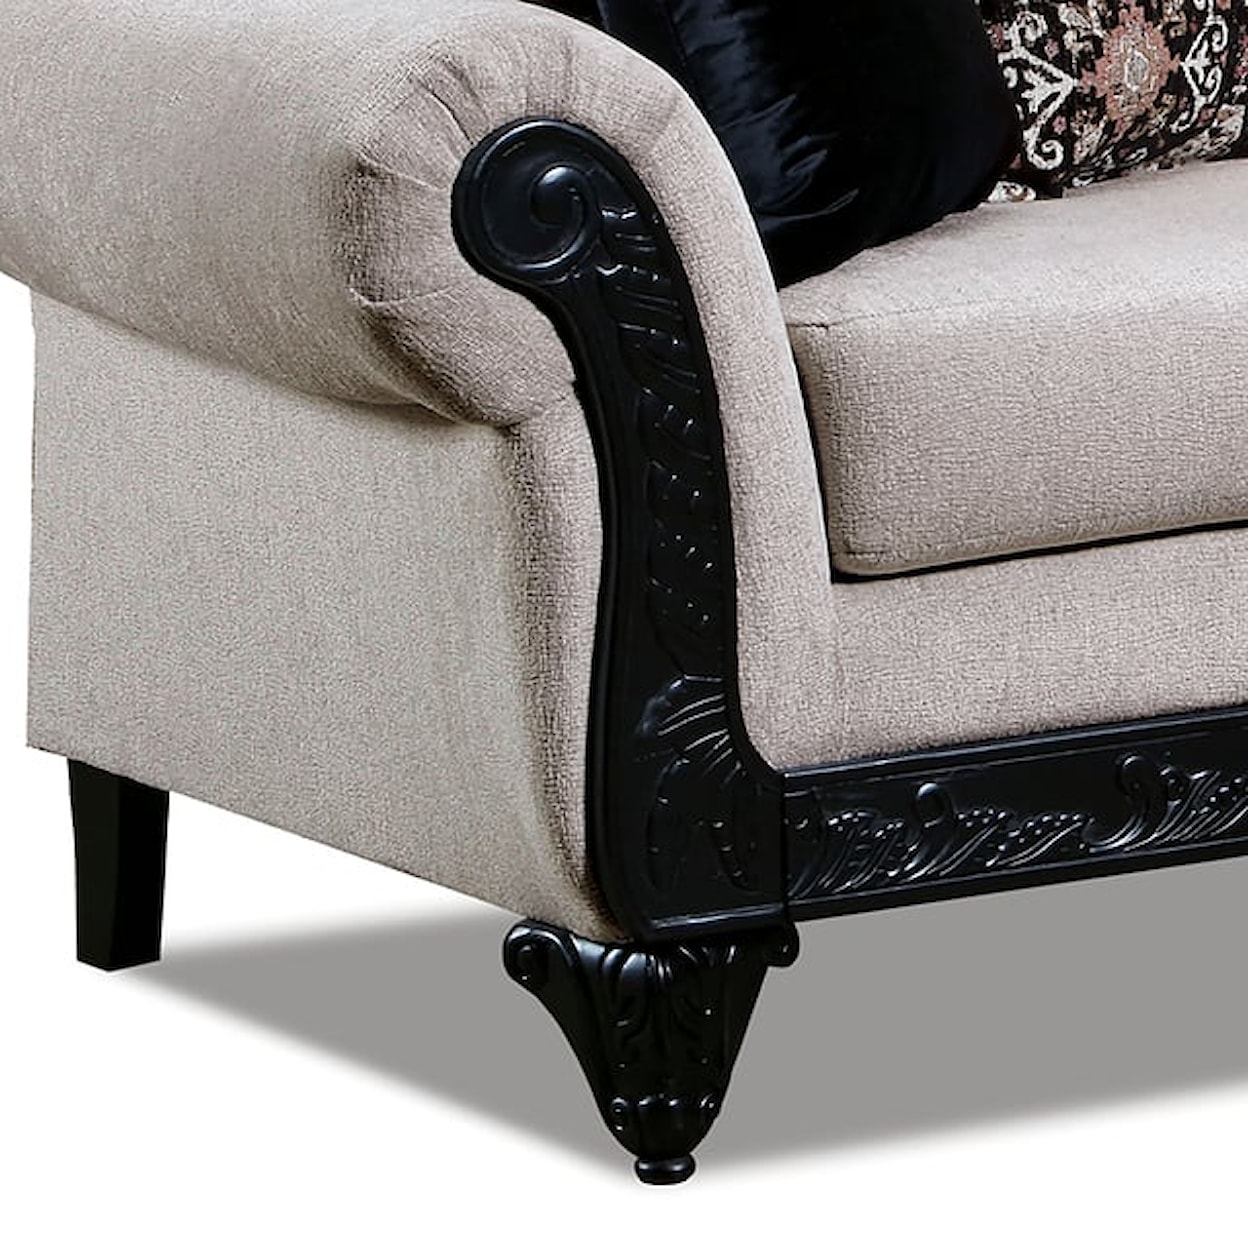 Furniture of America - FOA Molfetta Traditional Sofa